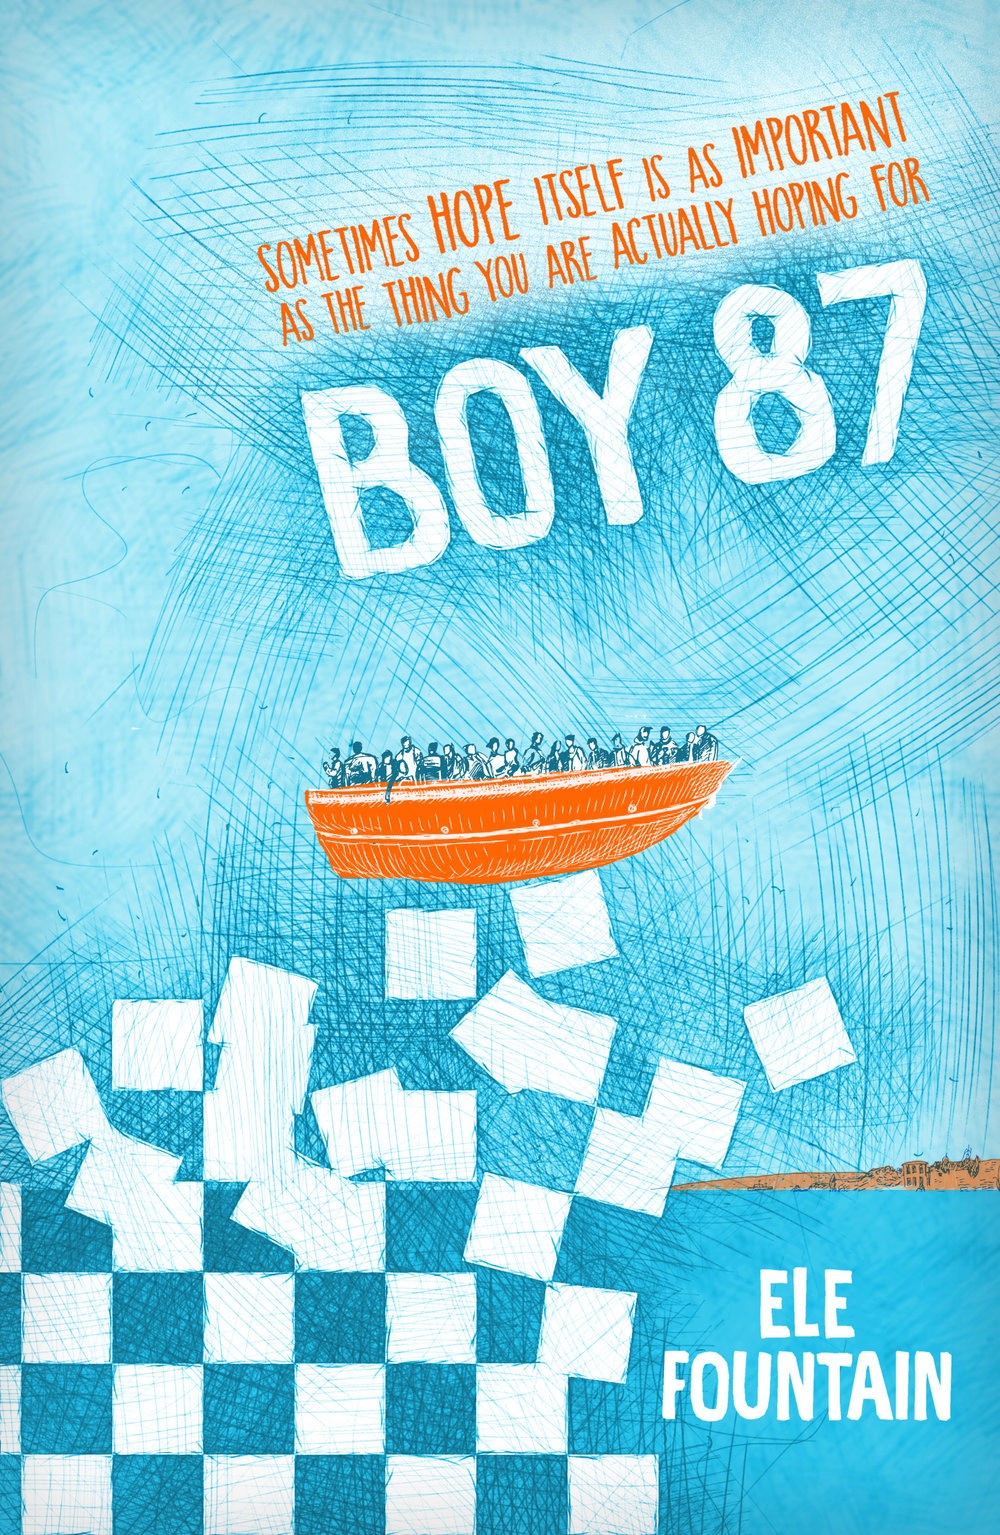 Boy 87 cover